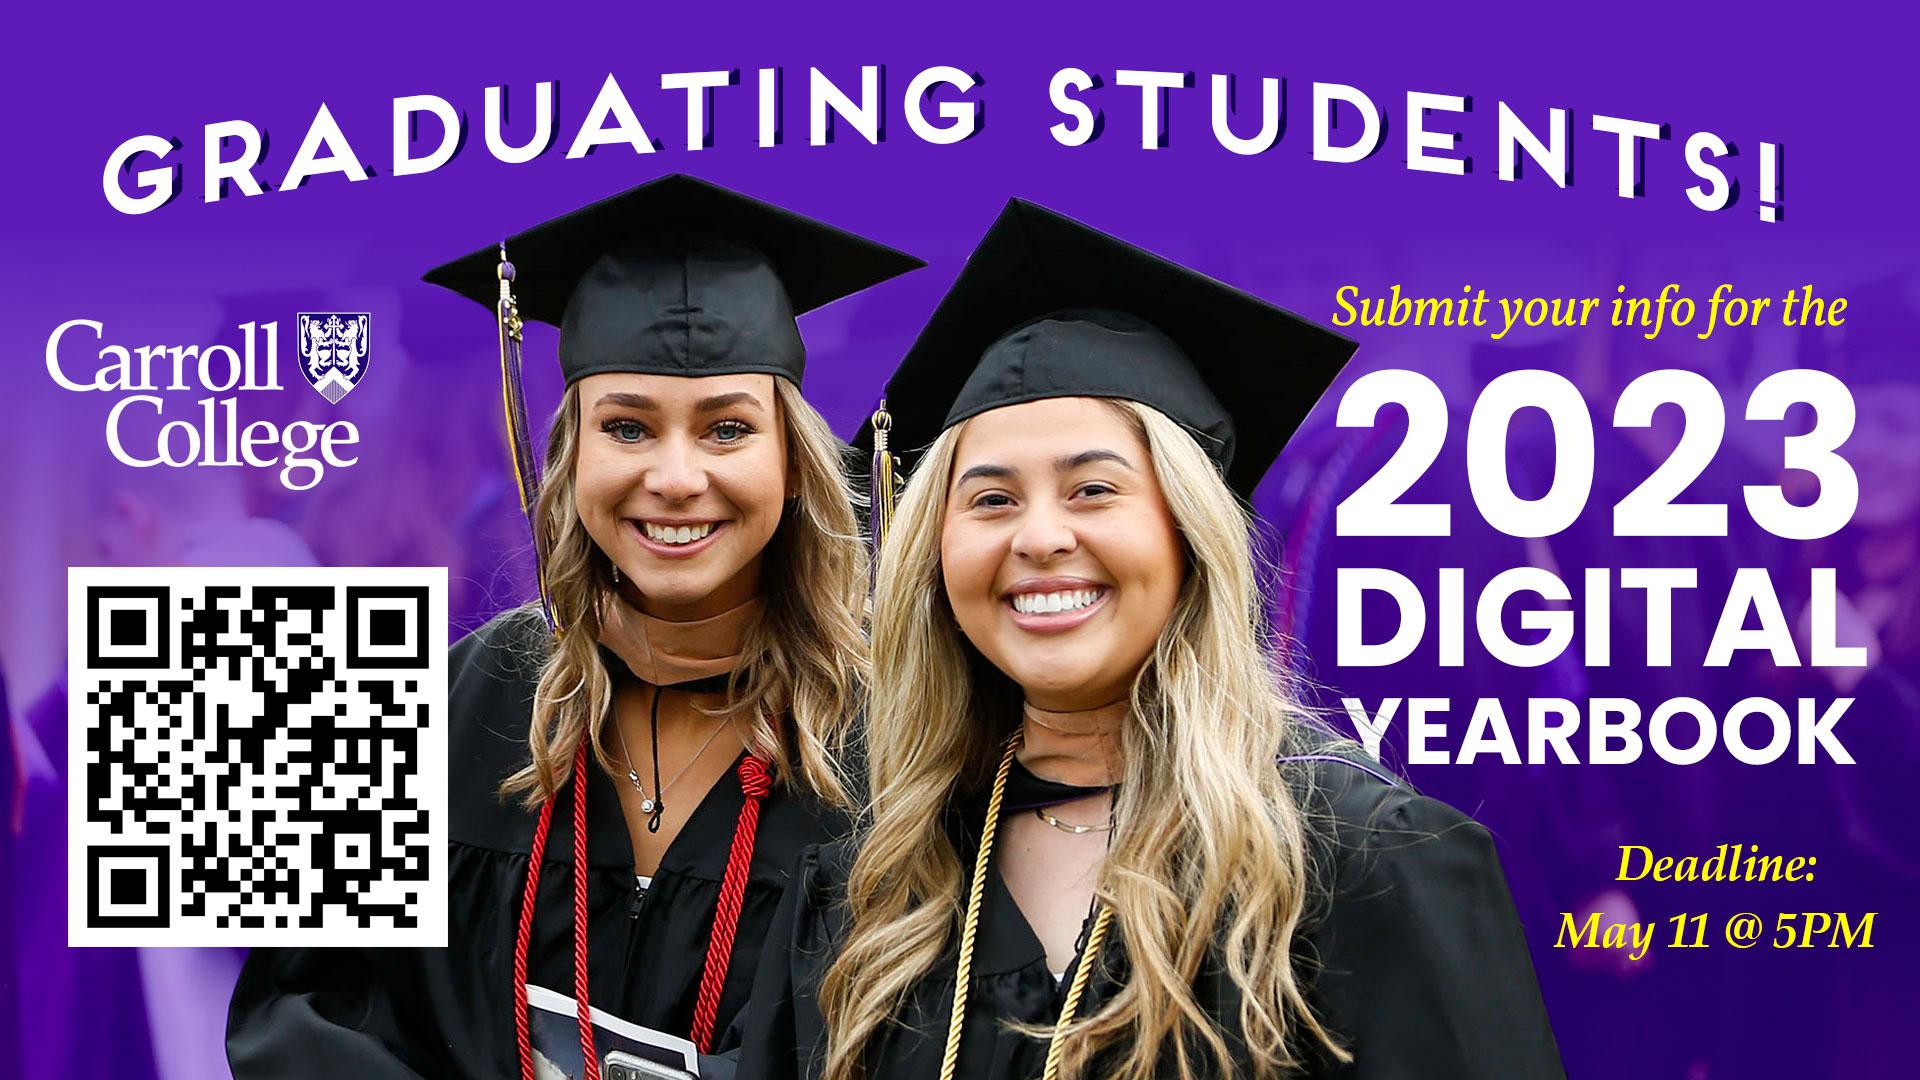 Graduation Digital Yearbook Deadline graphic